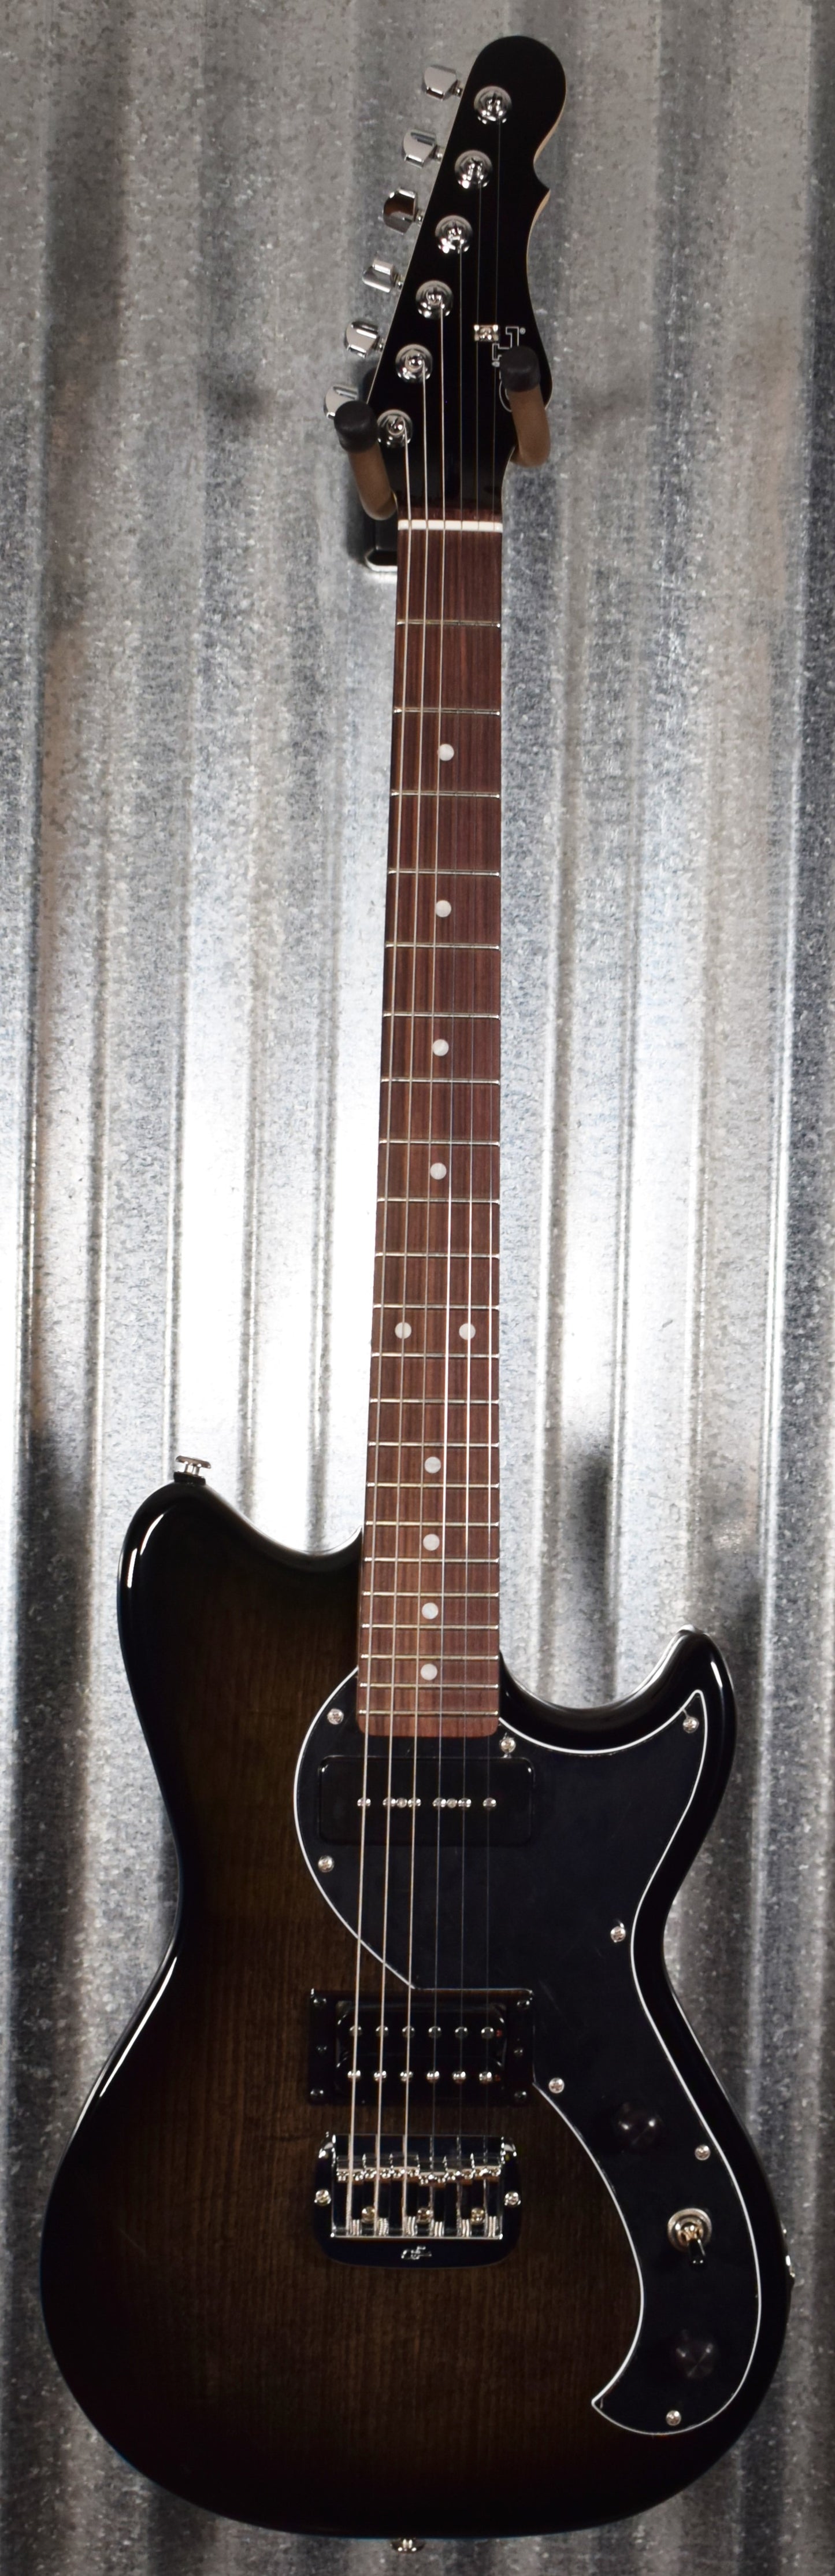 G&L USA Fallout Blackburst Rosewood Satin Neck Guitar & Case #6172